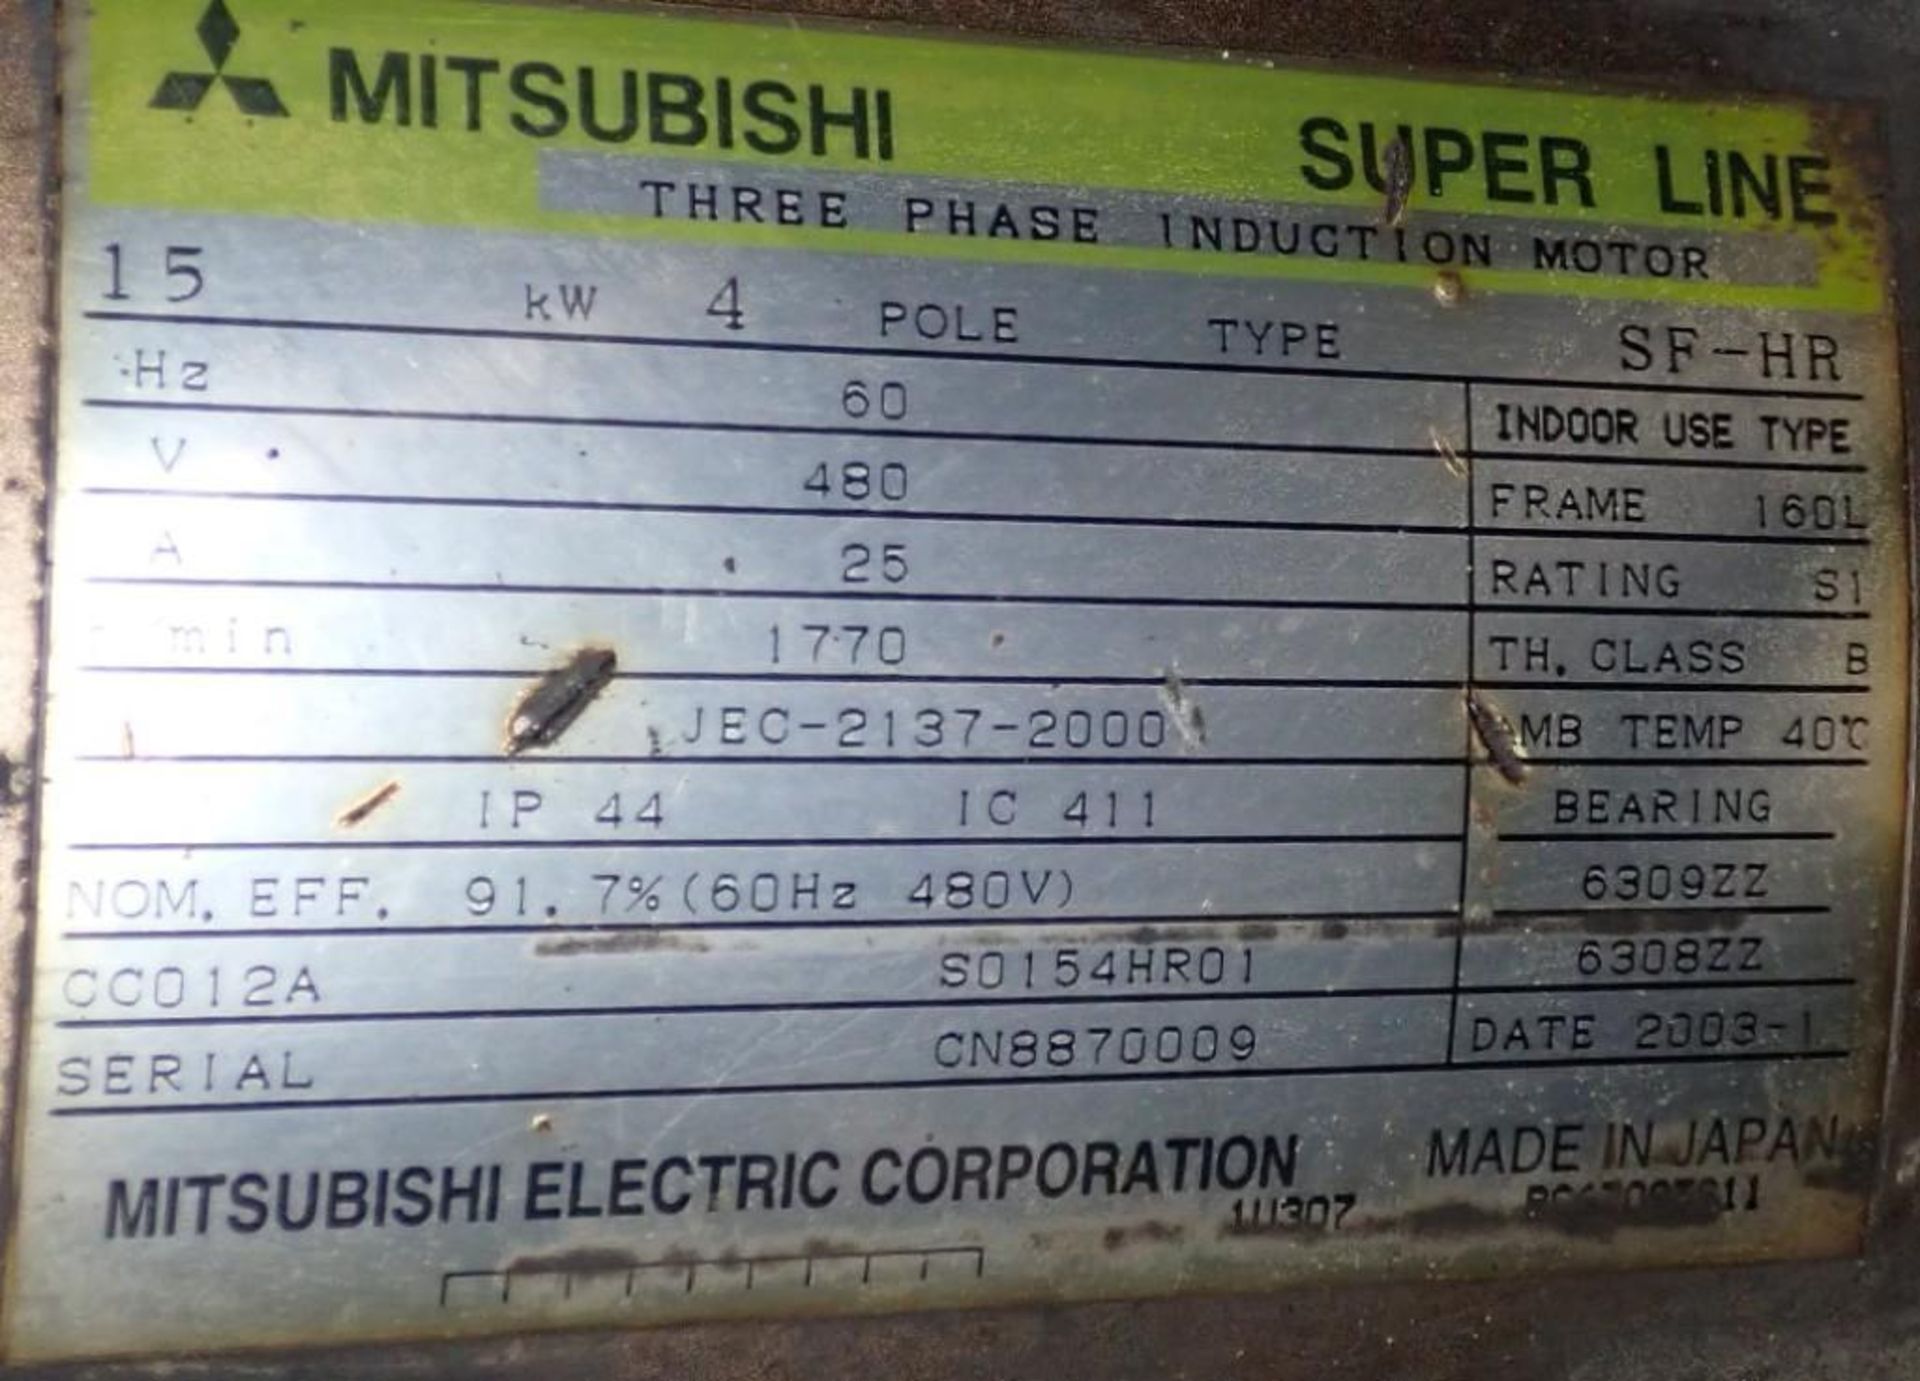 15 KW Mitsubishi #SF-HR Super Line Induction Motor - Image 4 of 5